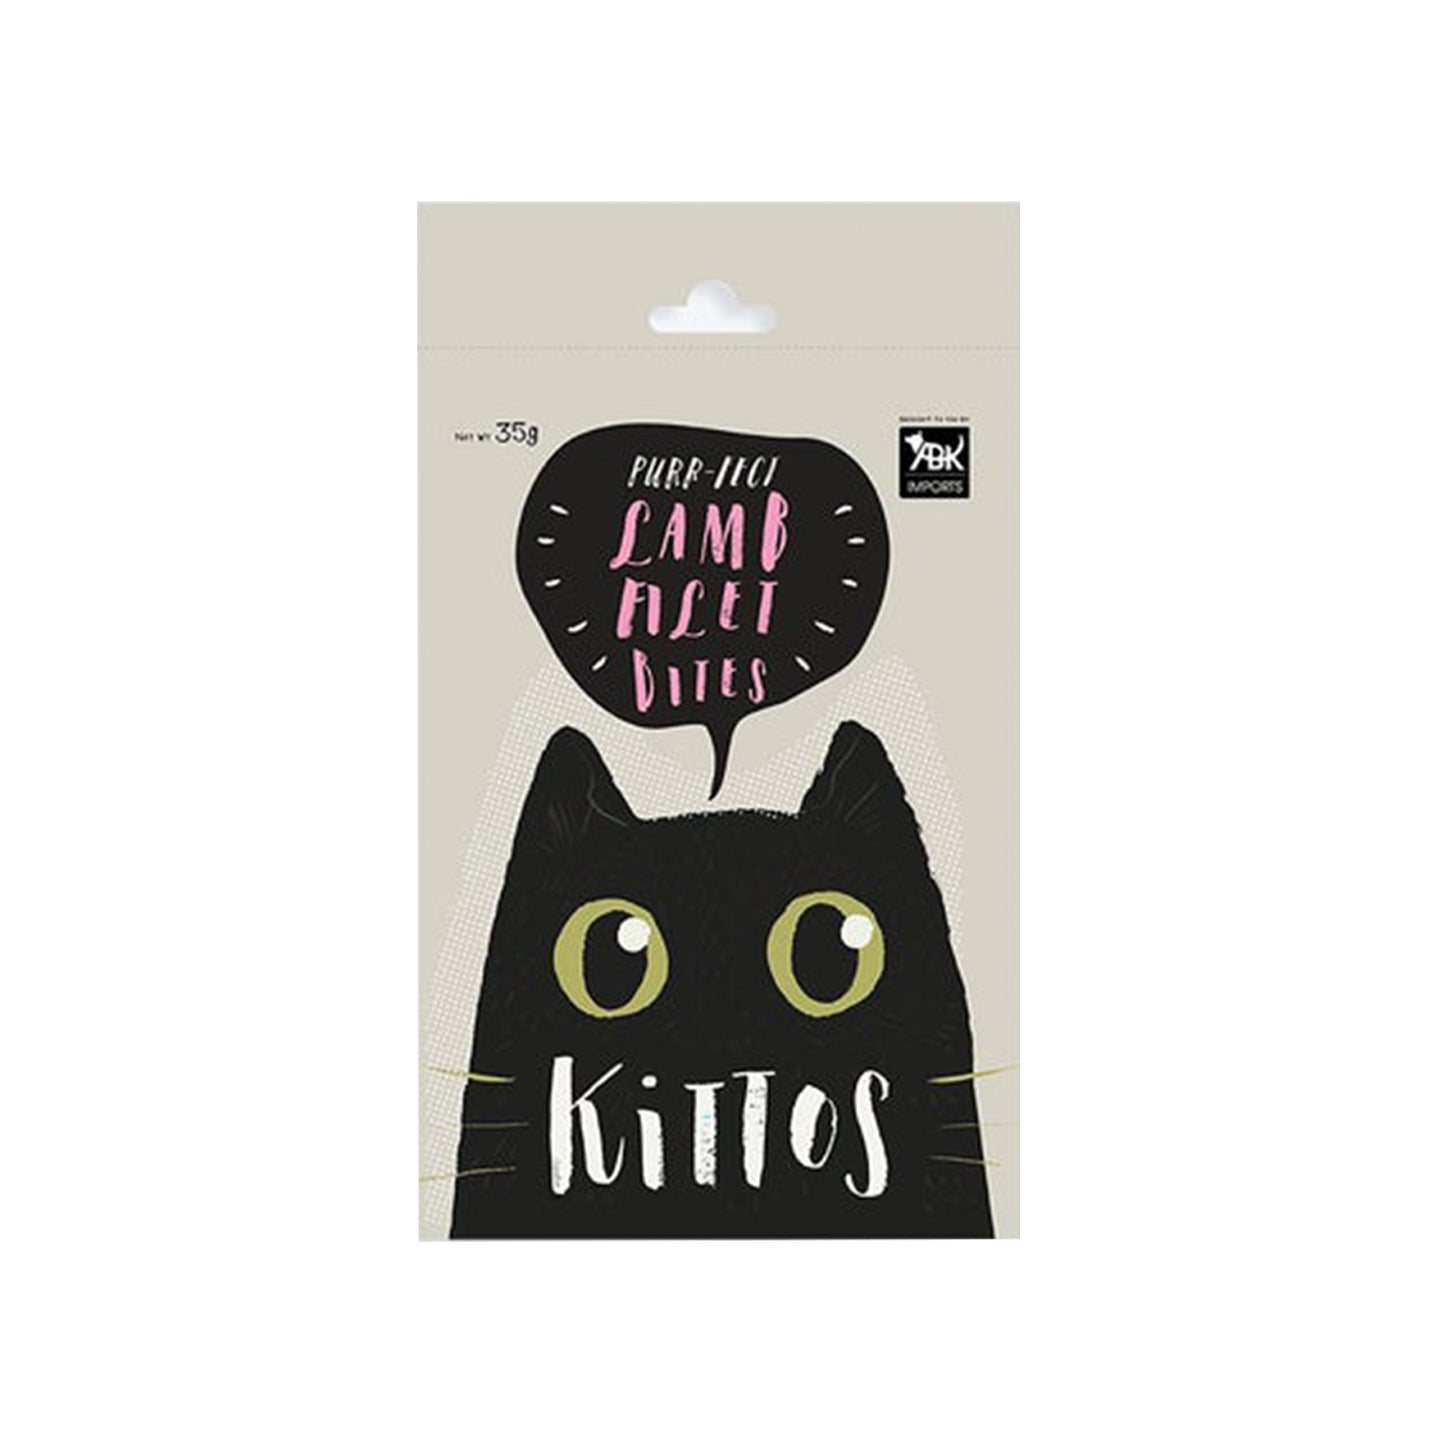 Kittos - Lamb Filet Bites Cat Treat